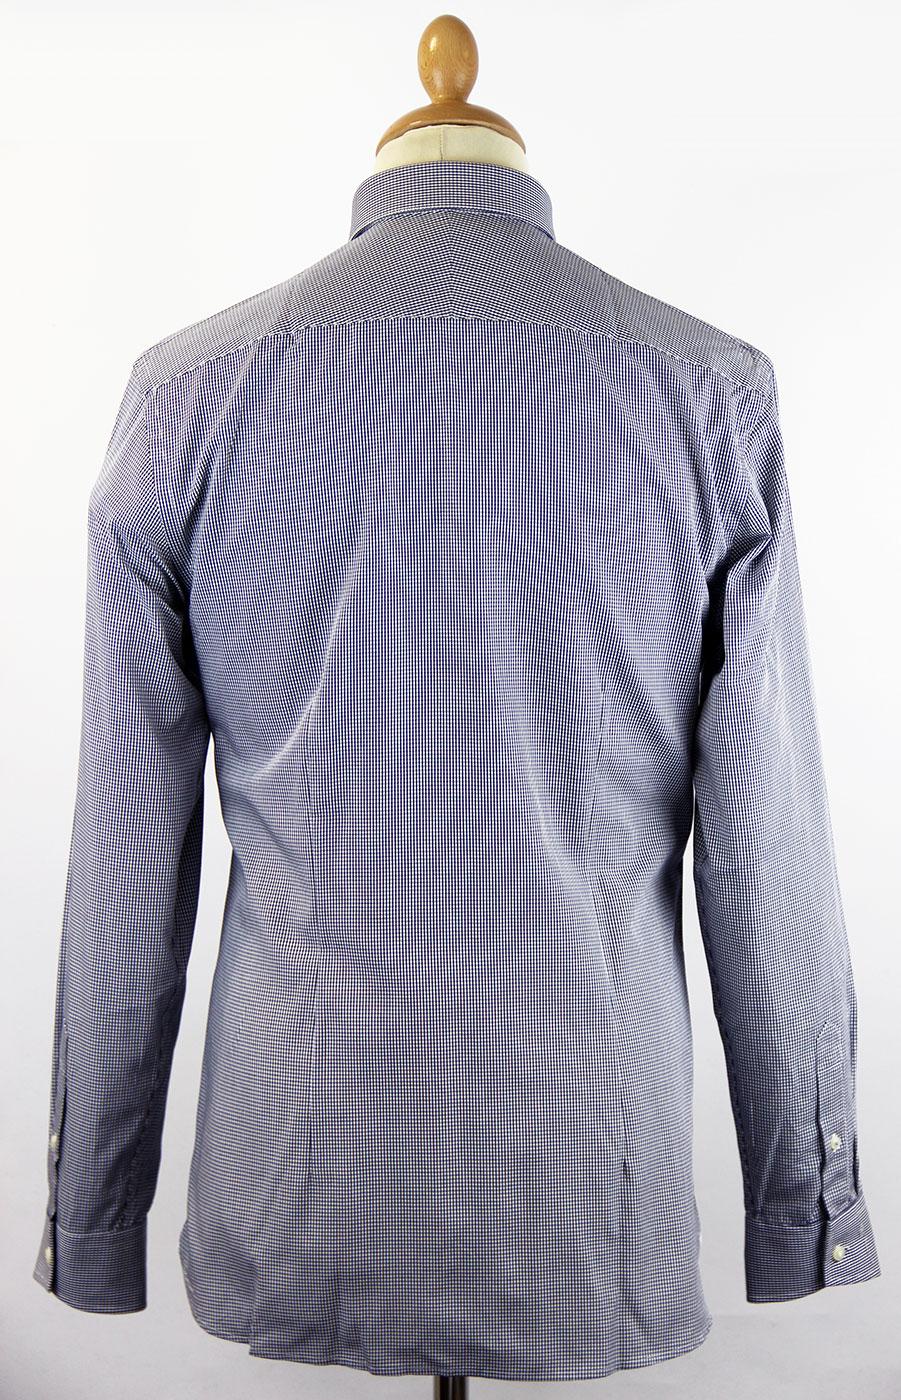 BEN SHERMAN Tailoring Retro Mod Penny Cutaway Collar Shirt Navy